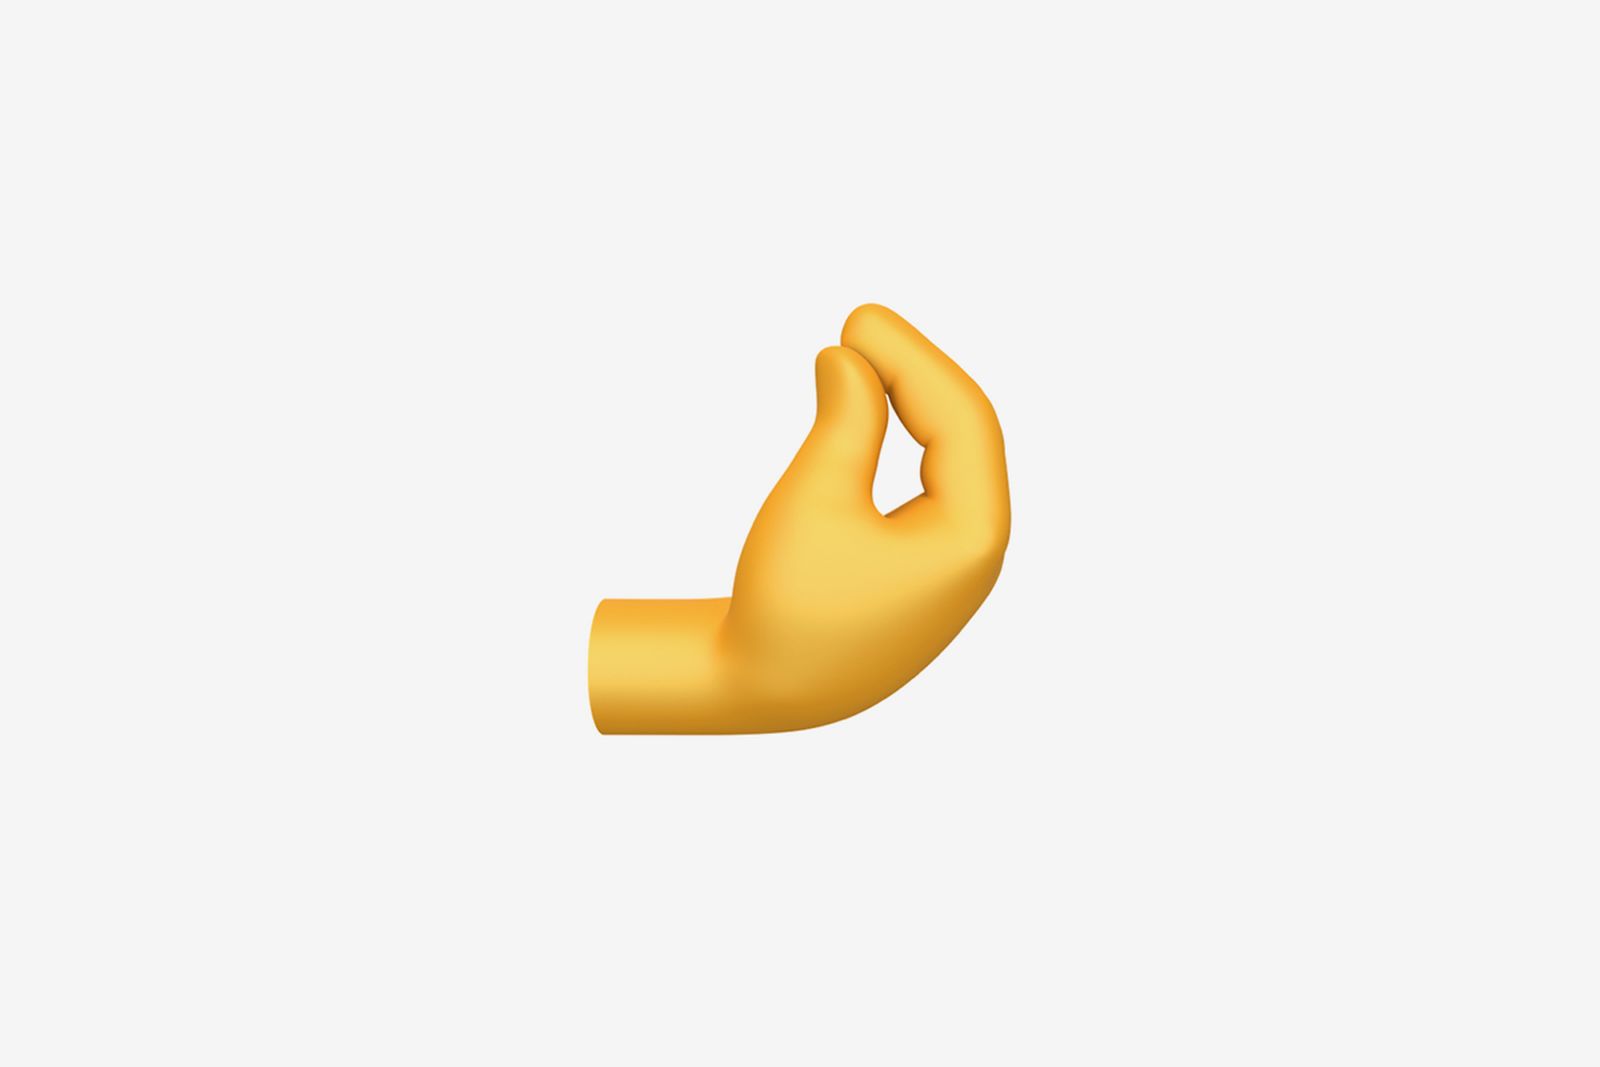 Apple pinched fingers emoji